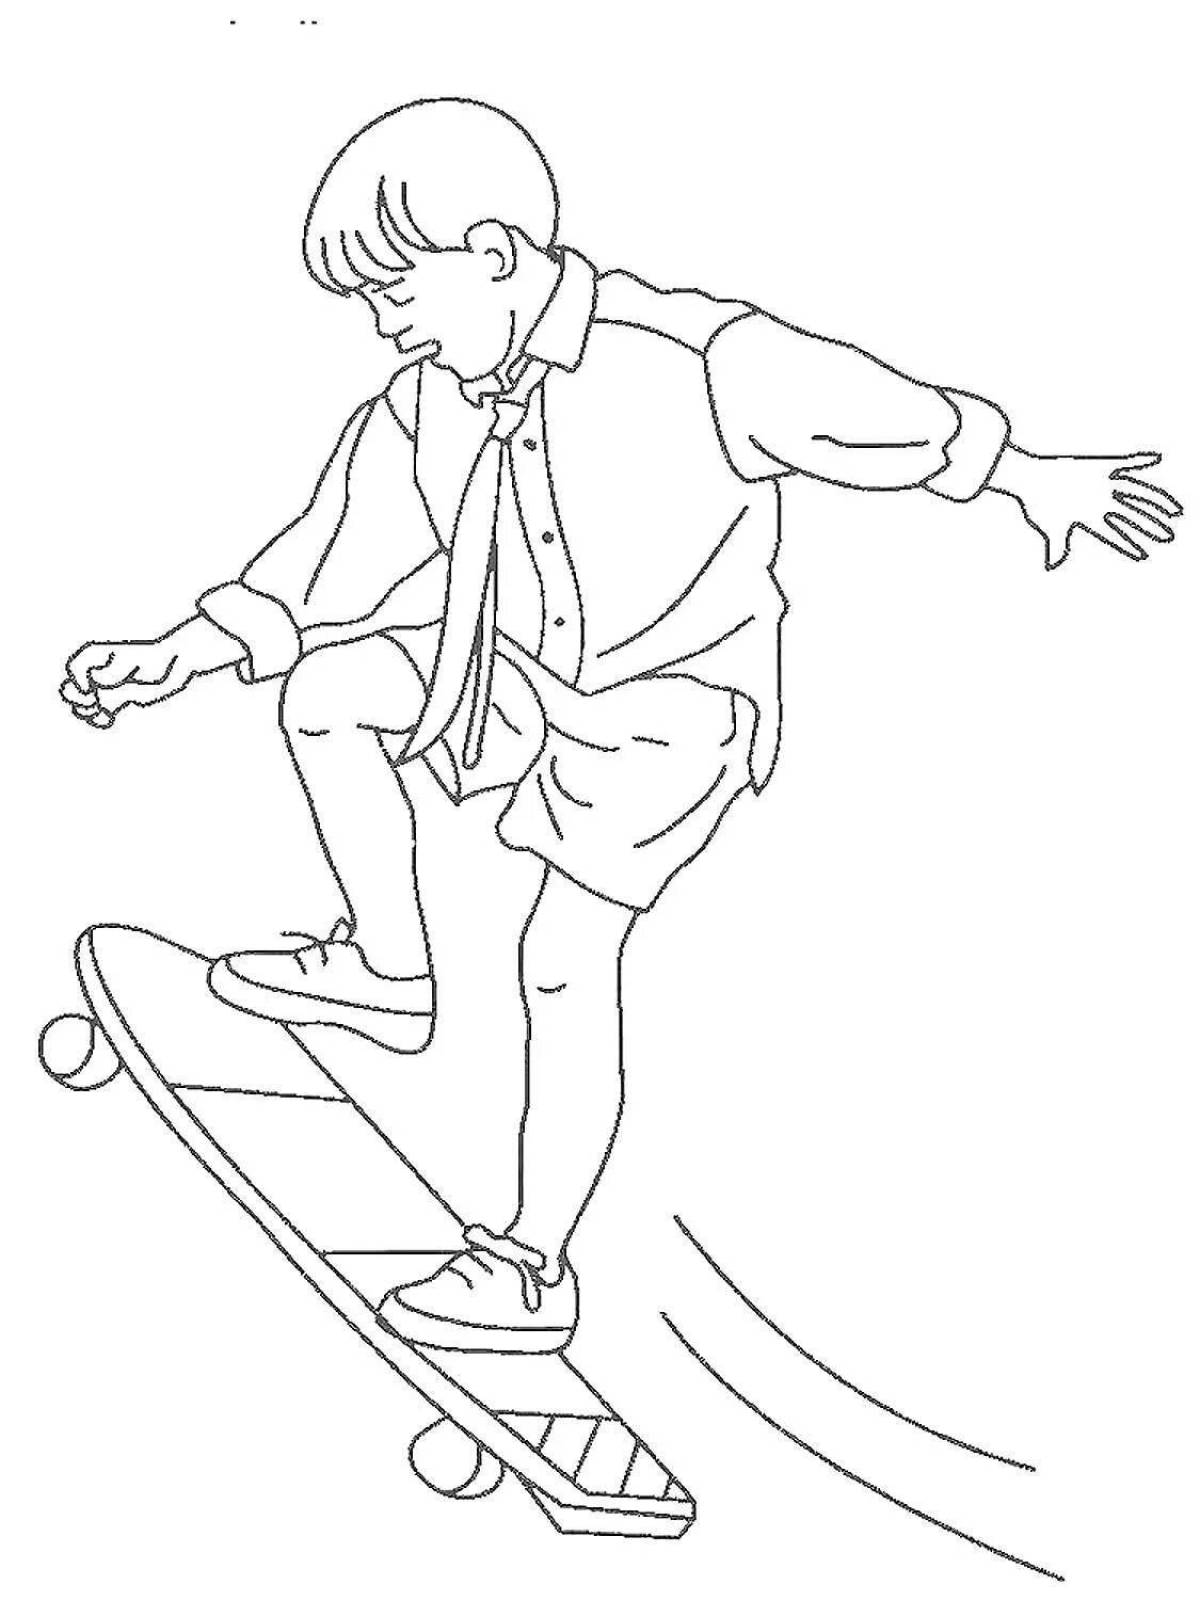 Раскраска талантливый скейтбордист